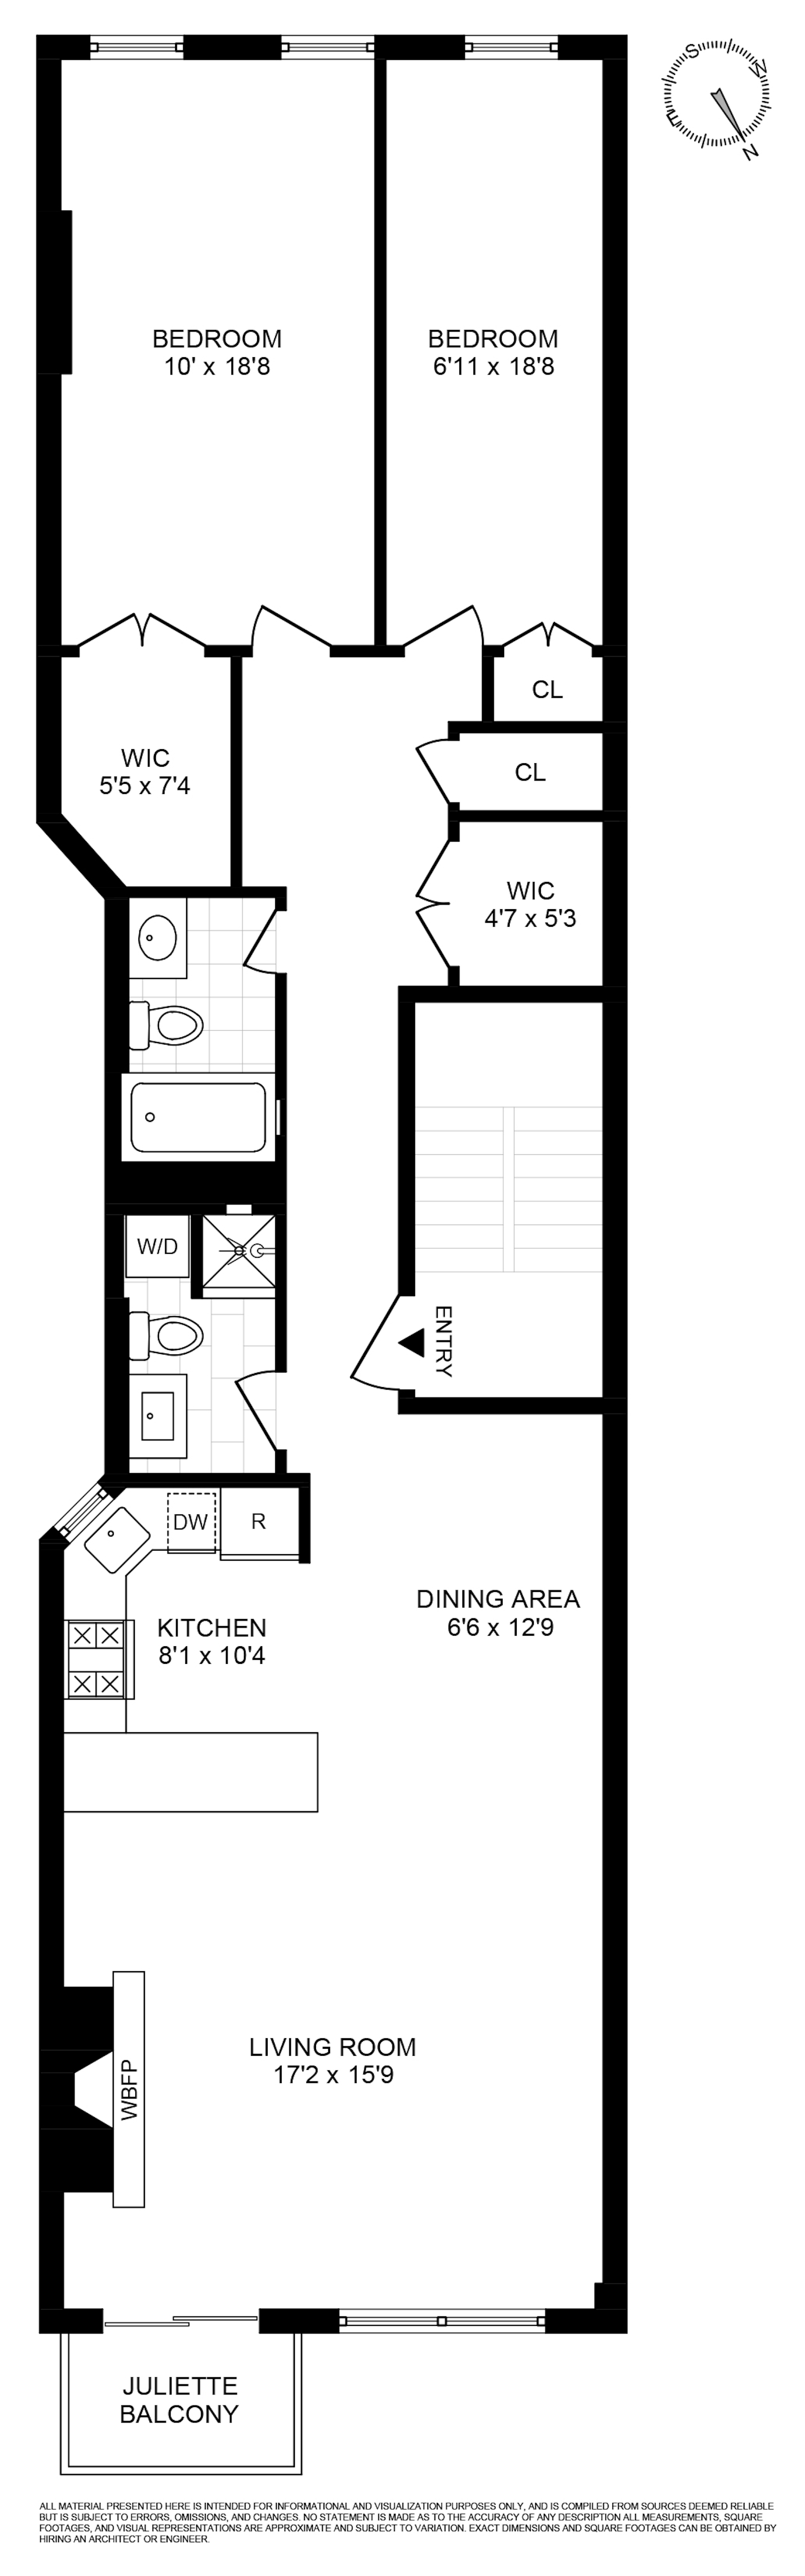 Floorplan for 432 East 85th Street, 3